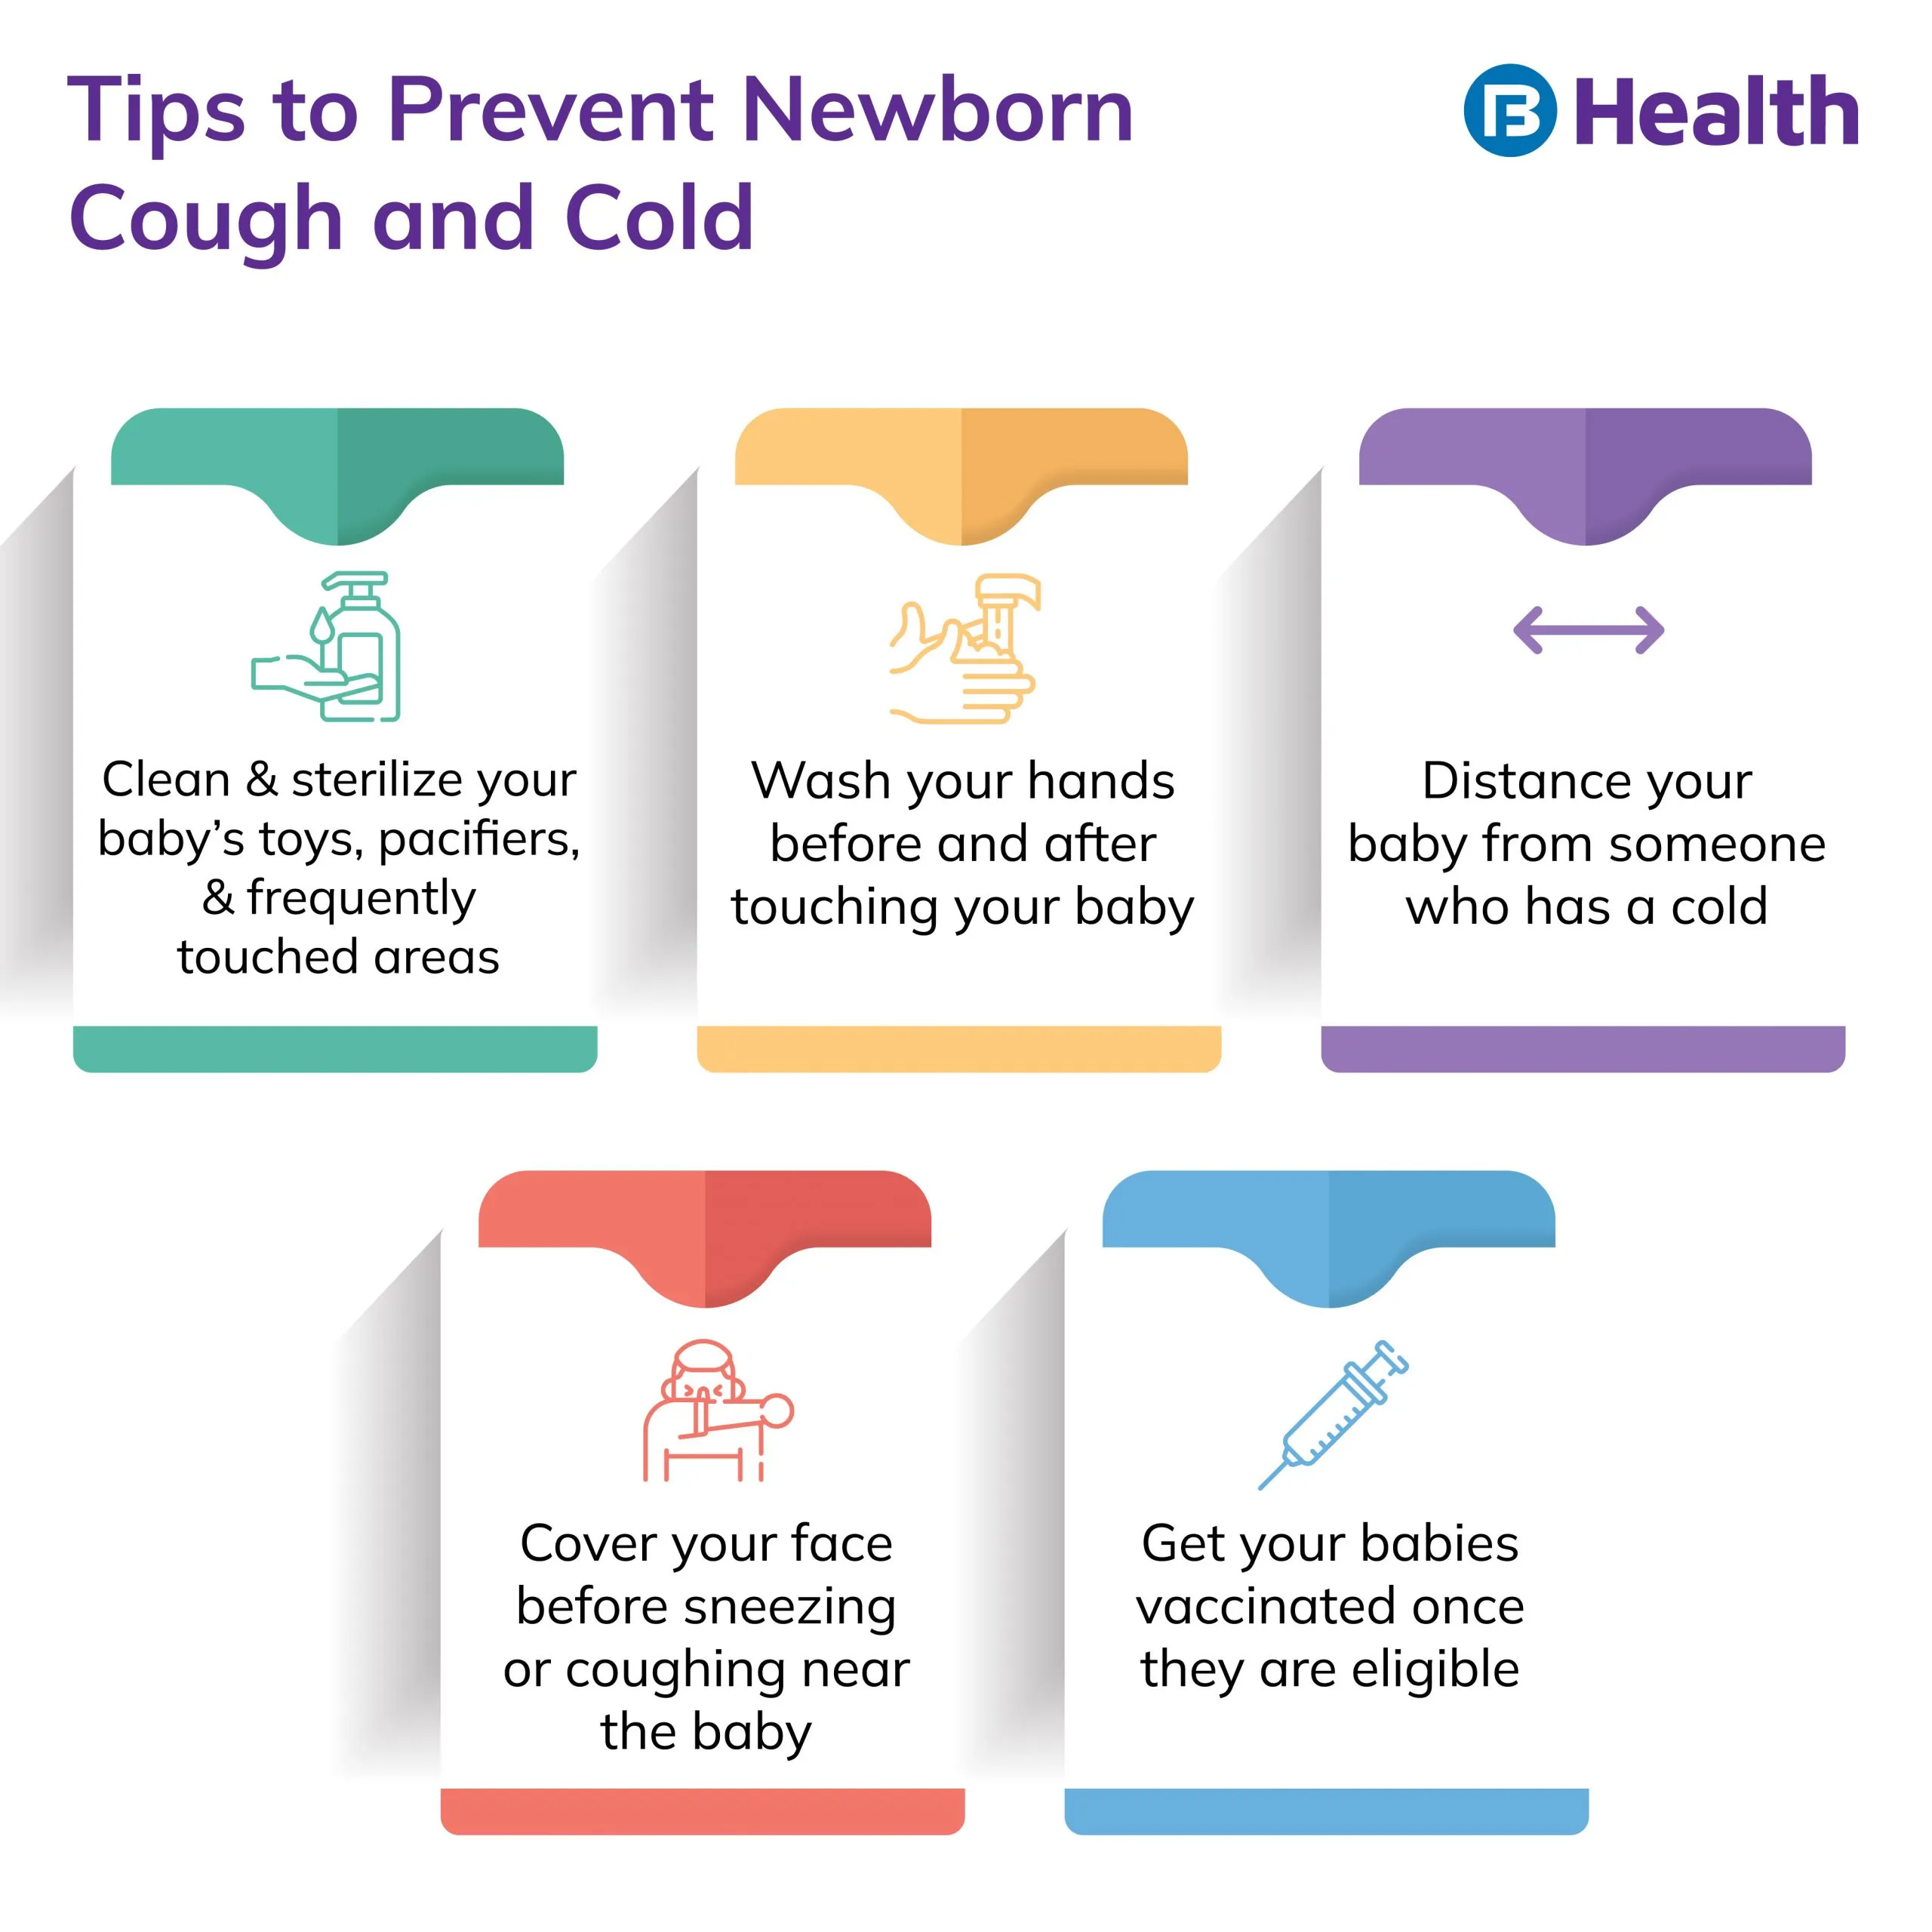 Newborn Cough and Cold prevention